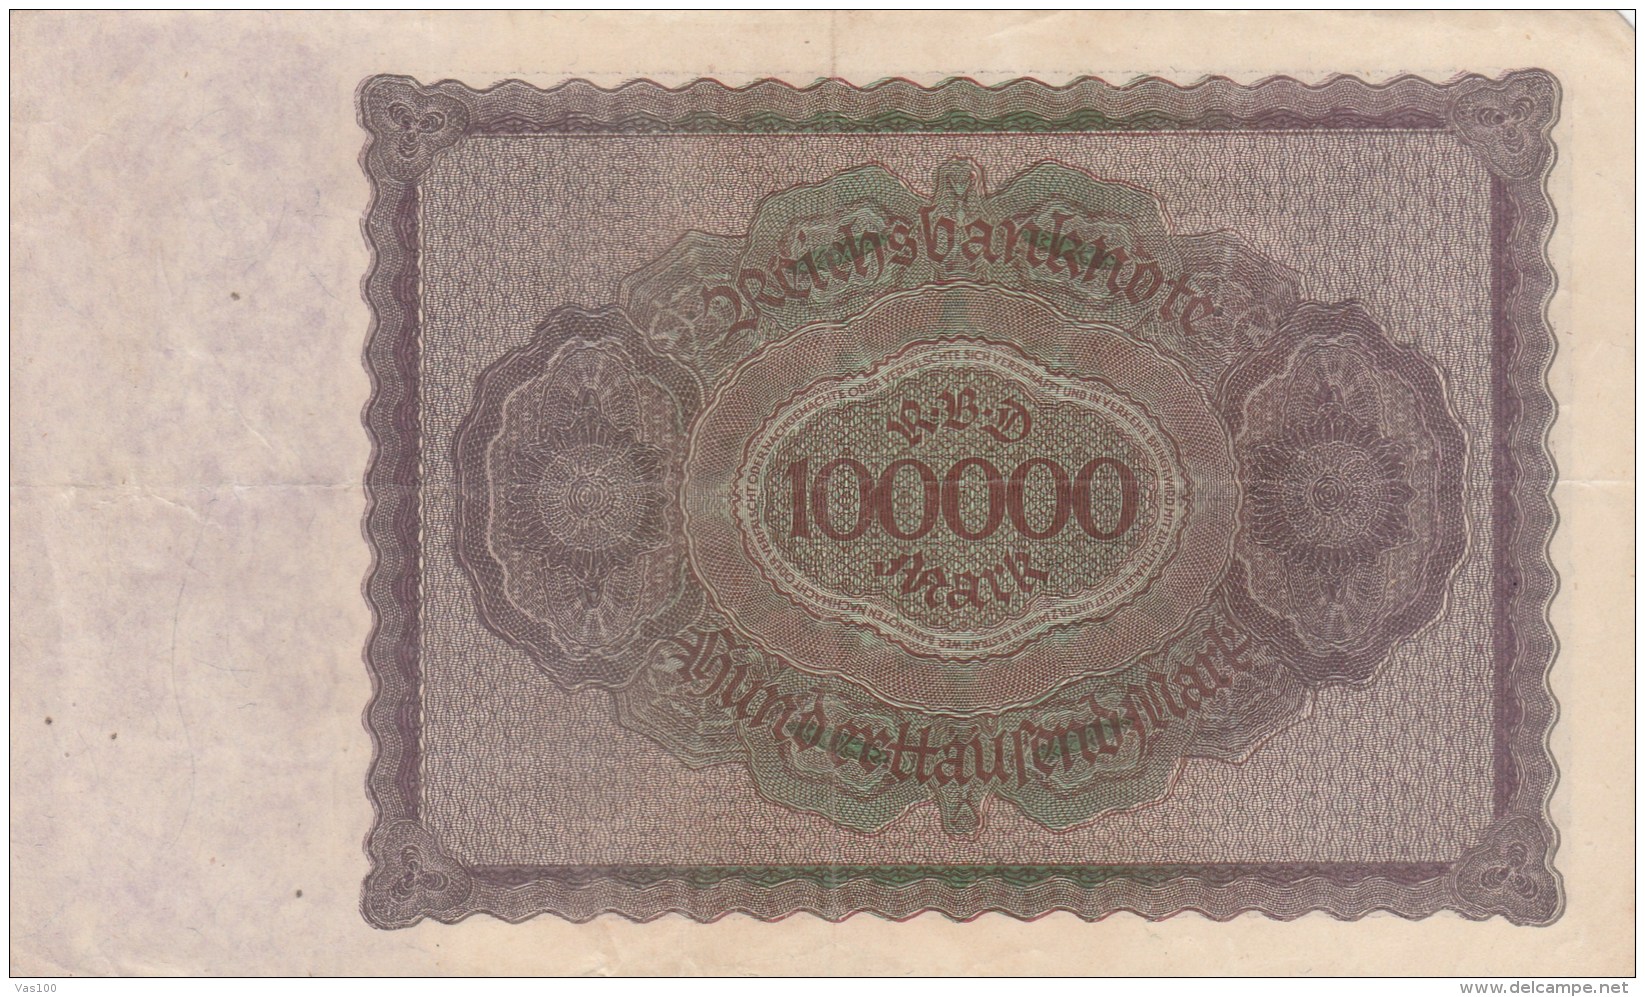 100.000 MARK, REICHSBANKNOTE, 1923, PAPER BANKNOTE, GERMANY. - 100.000 Mark